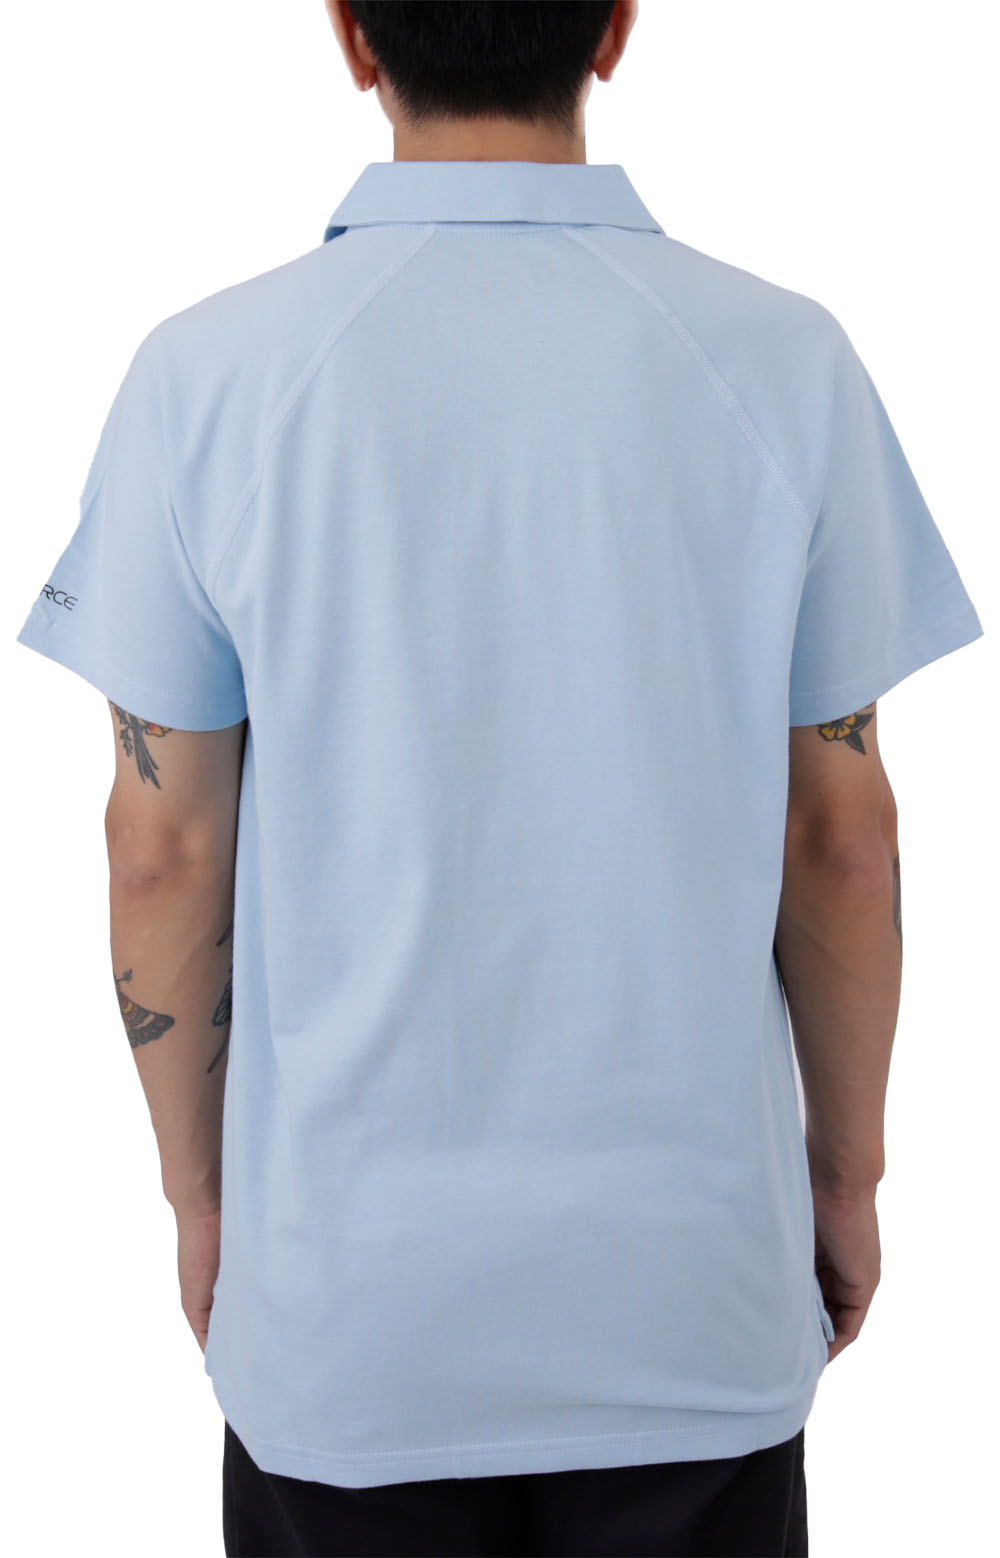 (103569) Force Delmont S/S Polo Shirt - Powder Blue